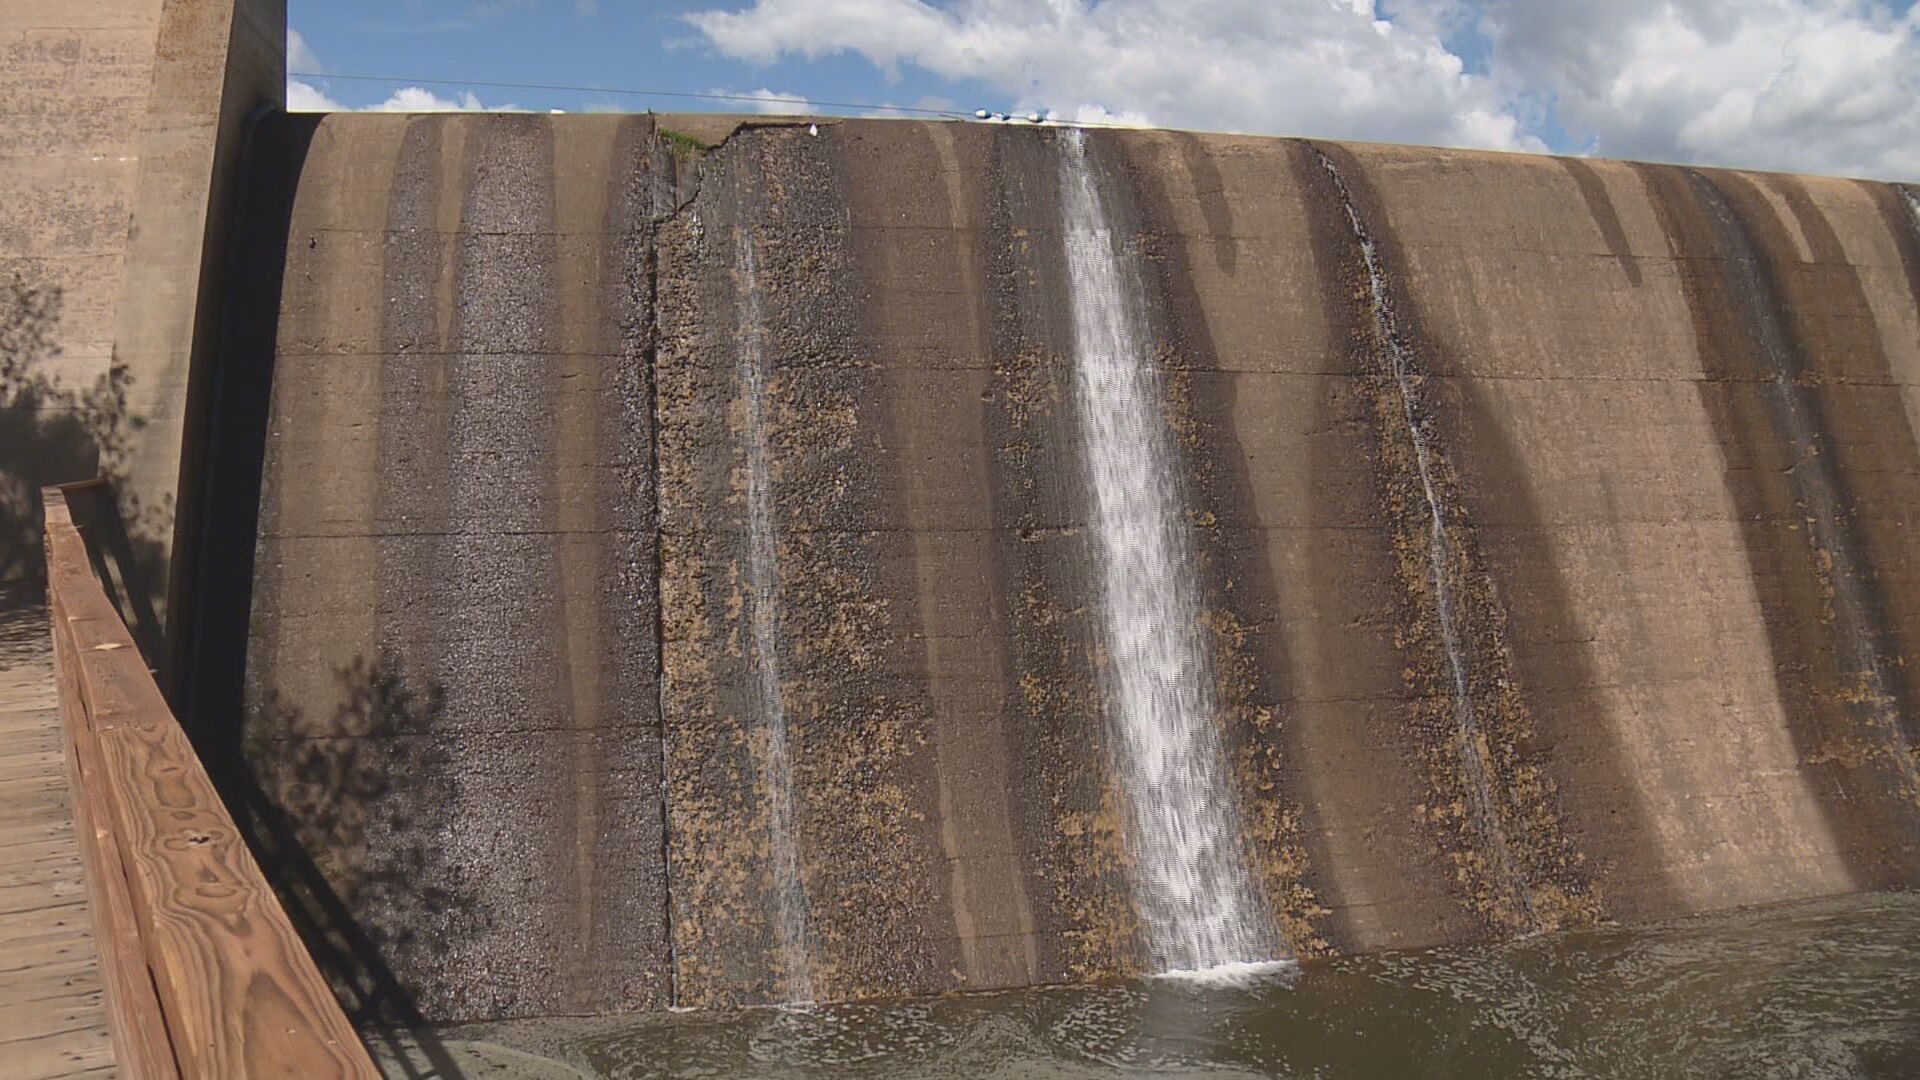 Are Dams Safe In Colorado? Top Dam Safety Official Explains Steps To Prevent Devastating Floods - CBS Denver